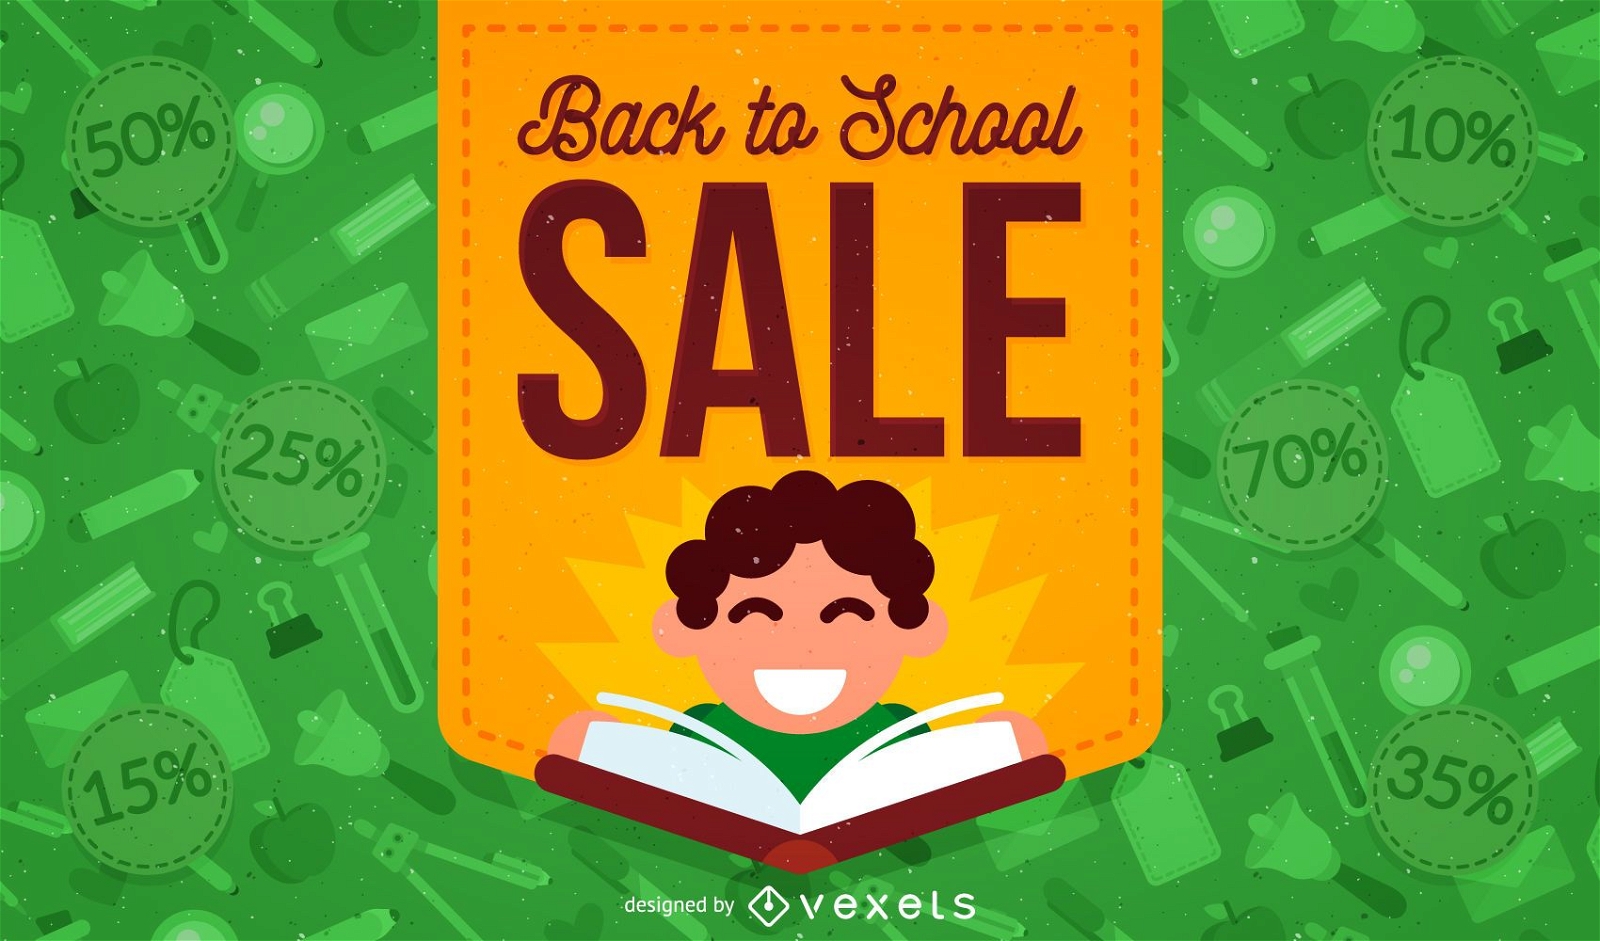 Back to School Verkauf mit Illustration